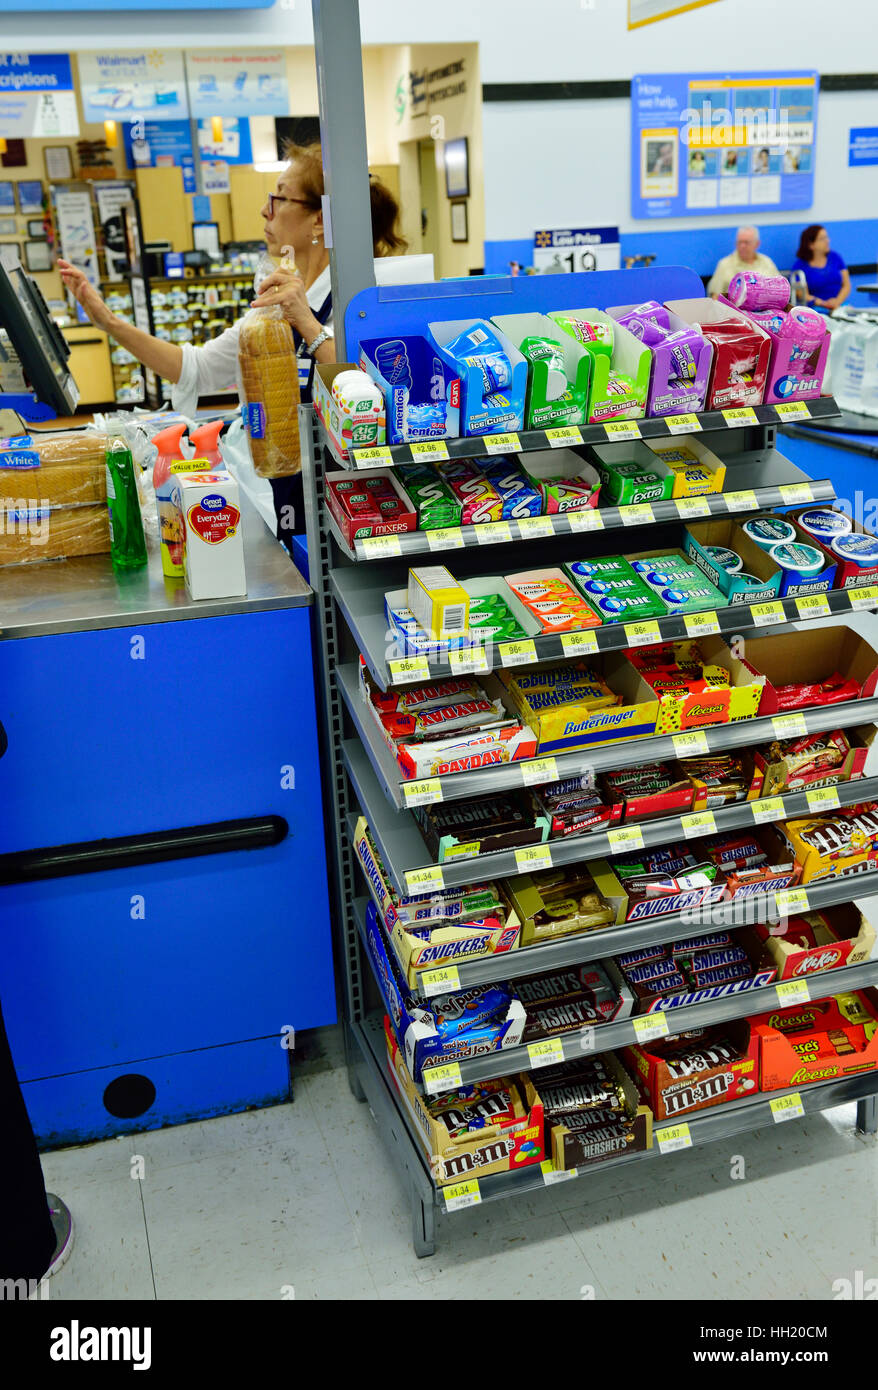 Mostrador de supermercado fotografías e imágenes de alta resolución - Alamy